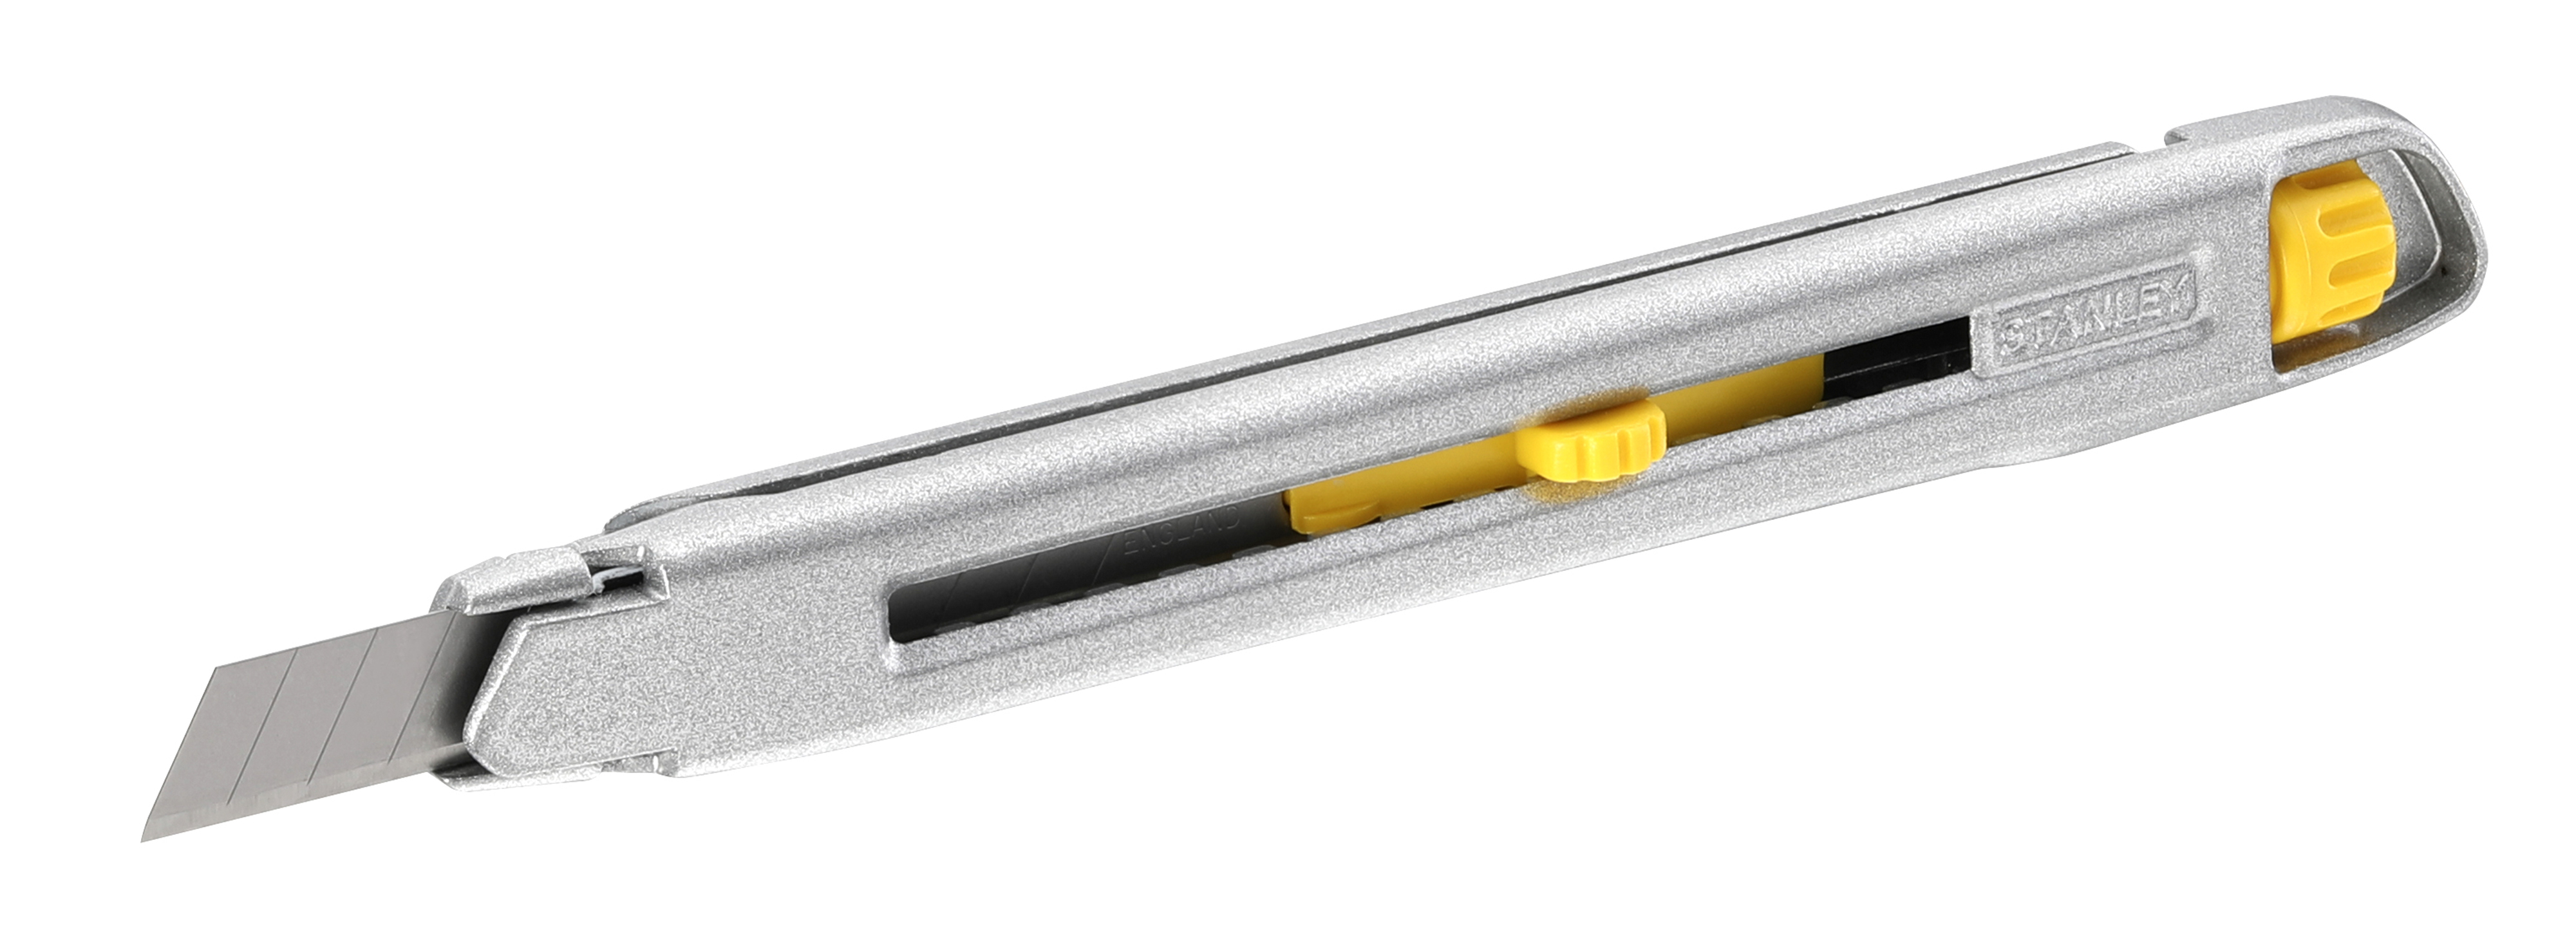 Cutter 9 mm interlock - CARRIE HILAIRE